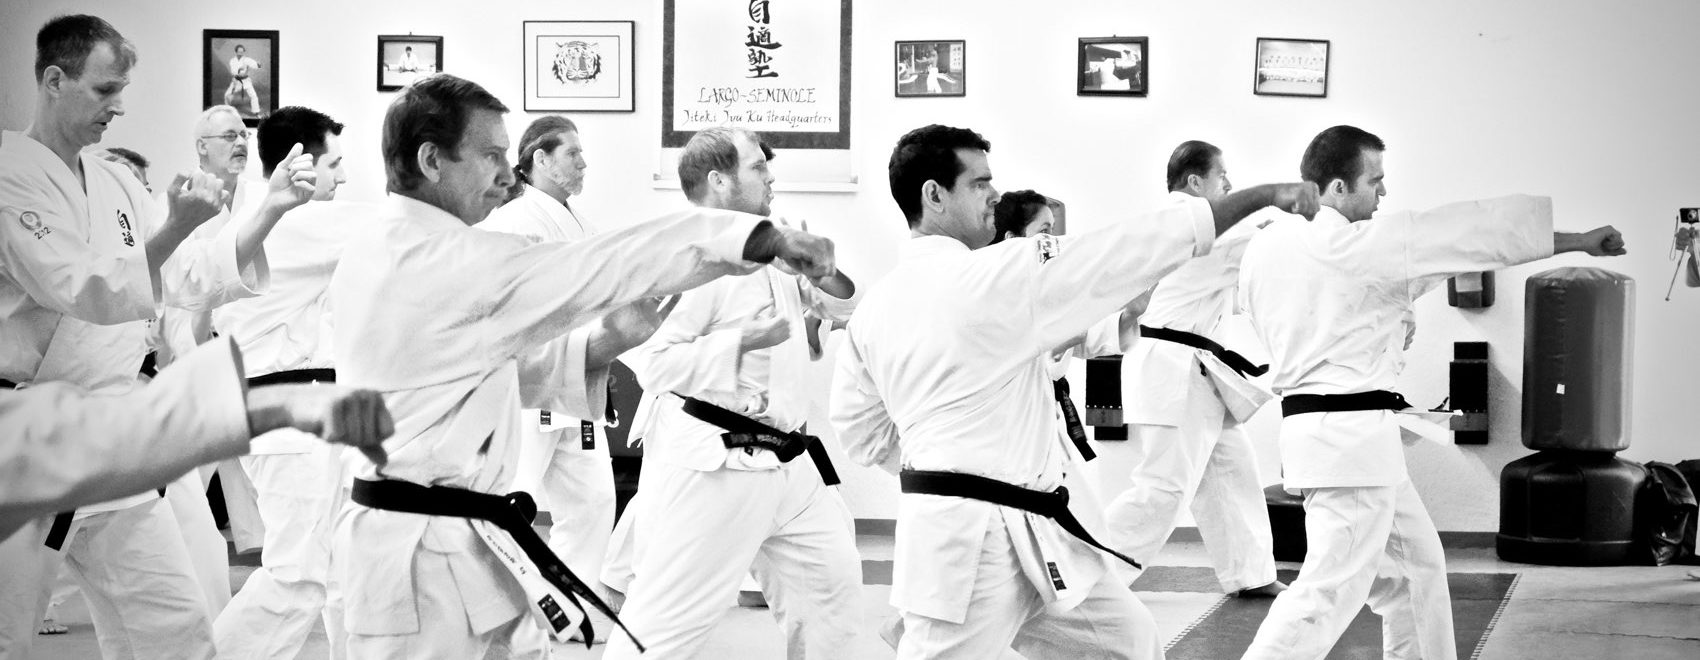 Martial Arts Class at the Dojo